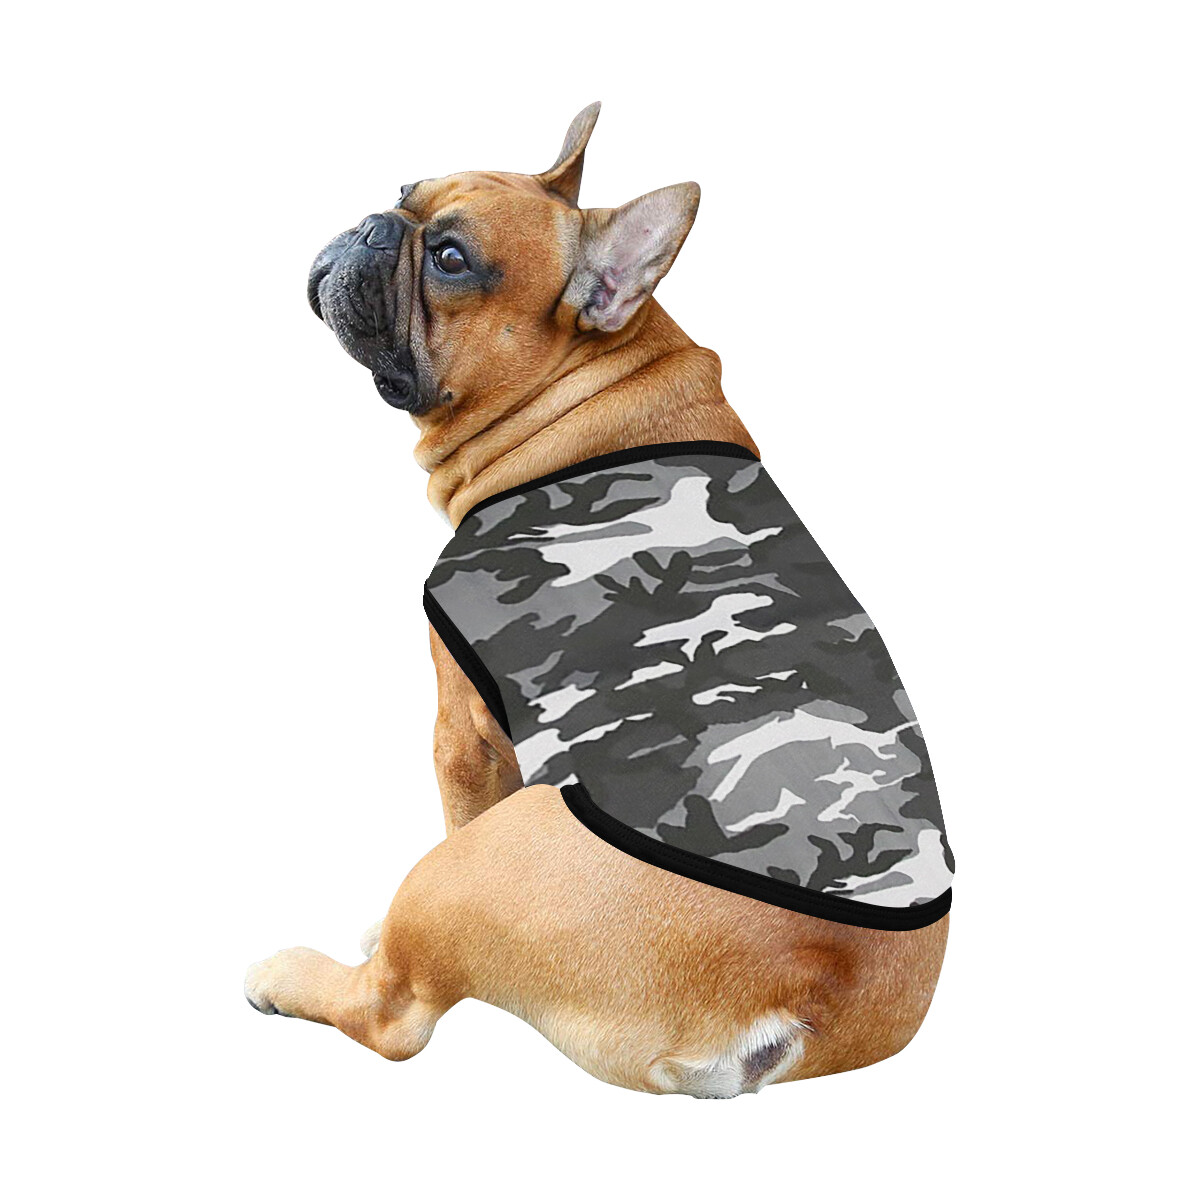 🐕 Camo Army Dog shirt Dog Tank Top, Dog shirt, Dog clothes, Gifts, front back print, 7 sizes XS to 3XL, dog t-shirt, dog gift gray white